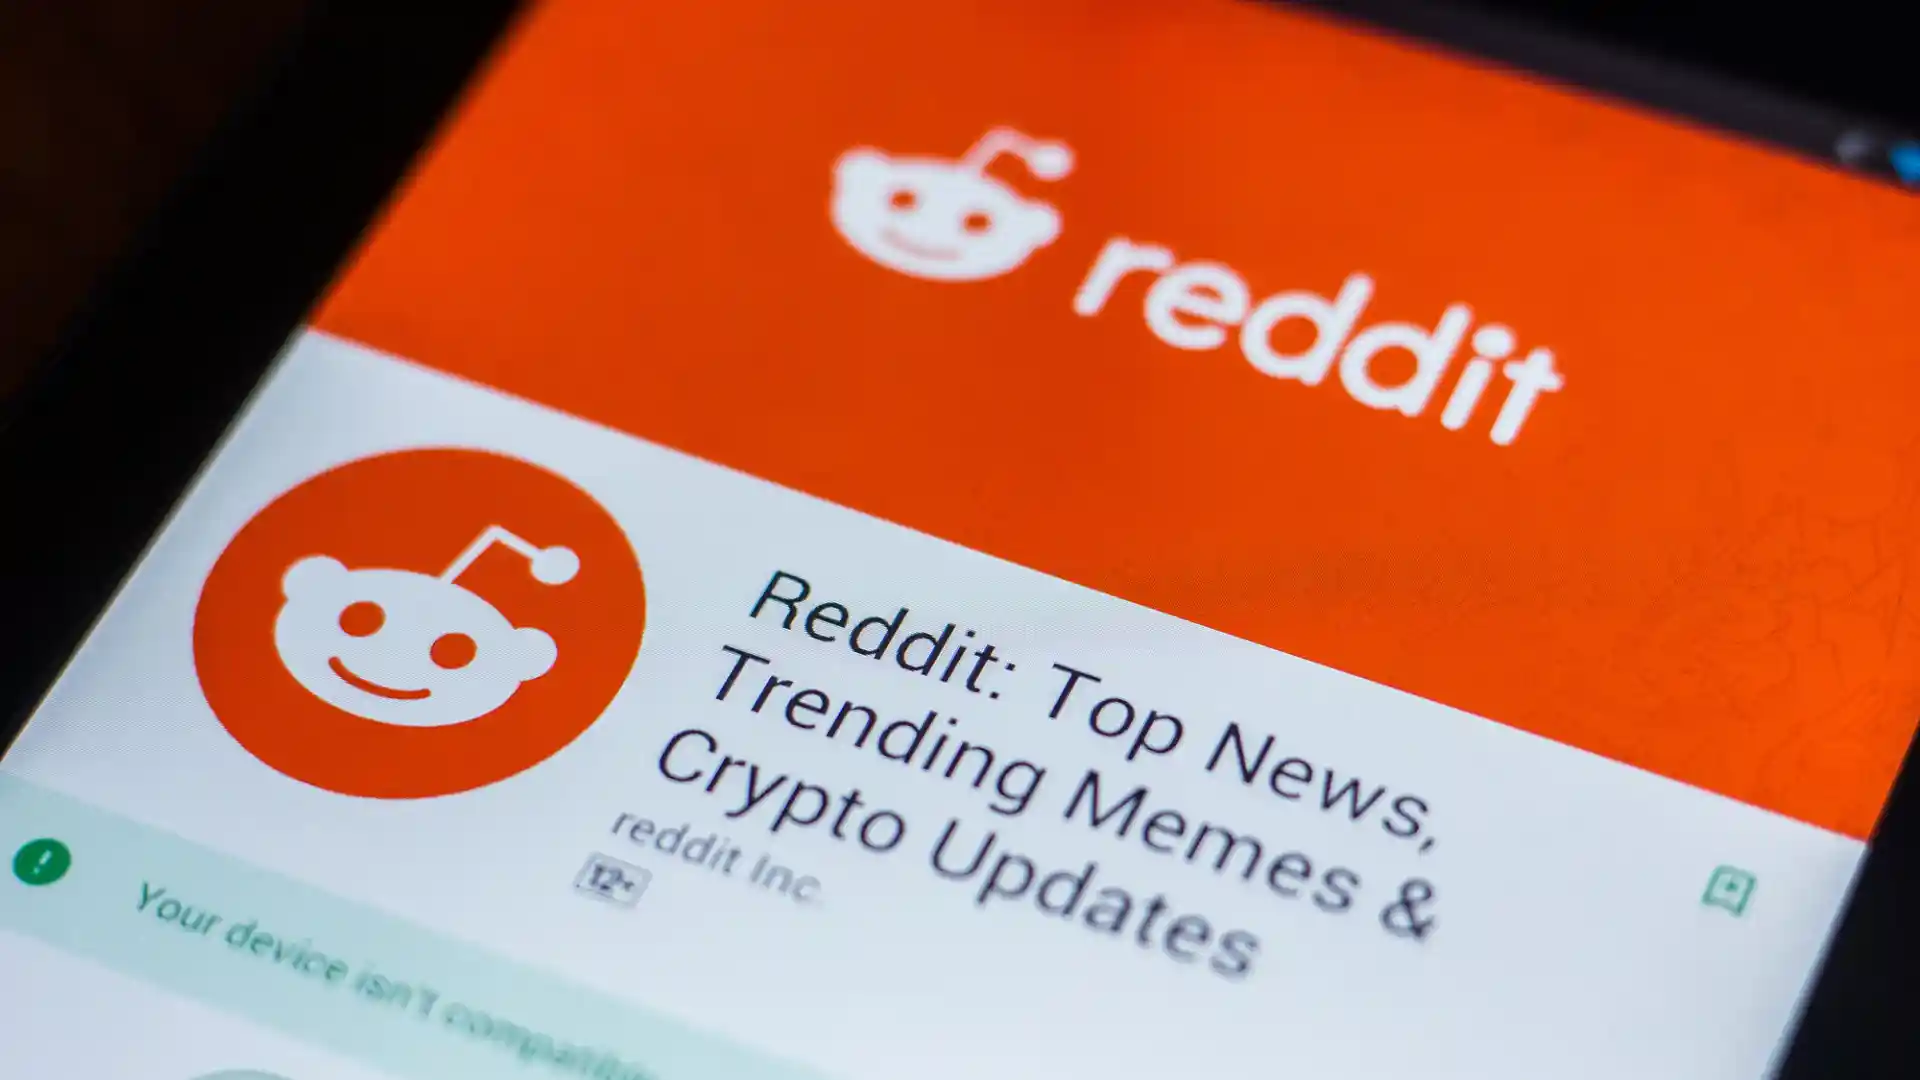 Social Media Giant Reddit Sets IPO Price at $34 Per Share